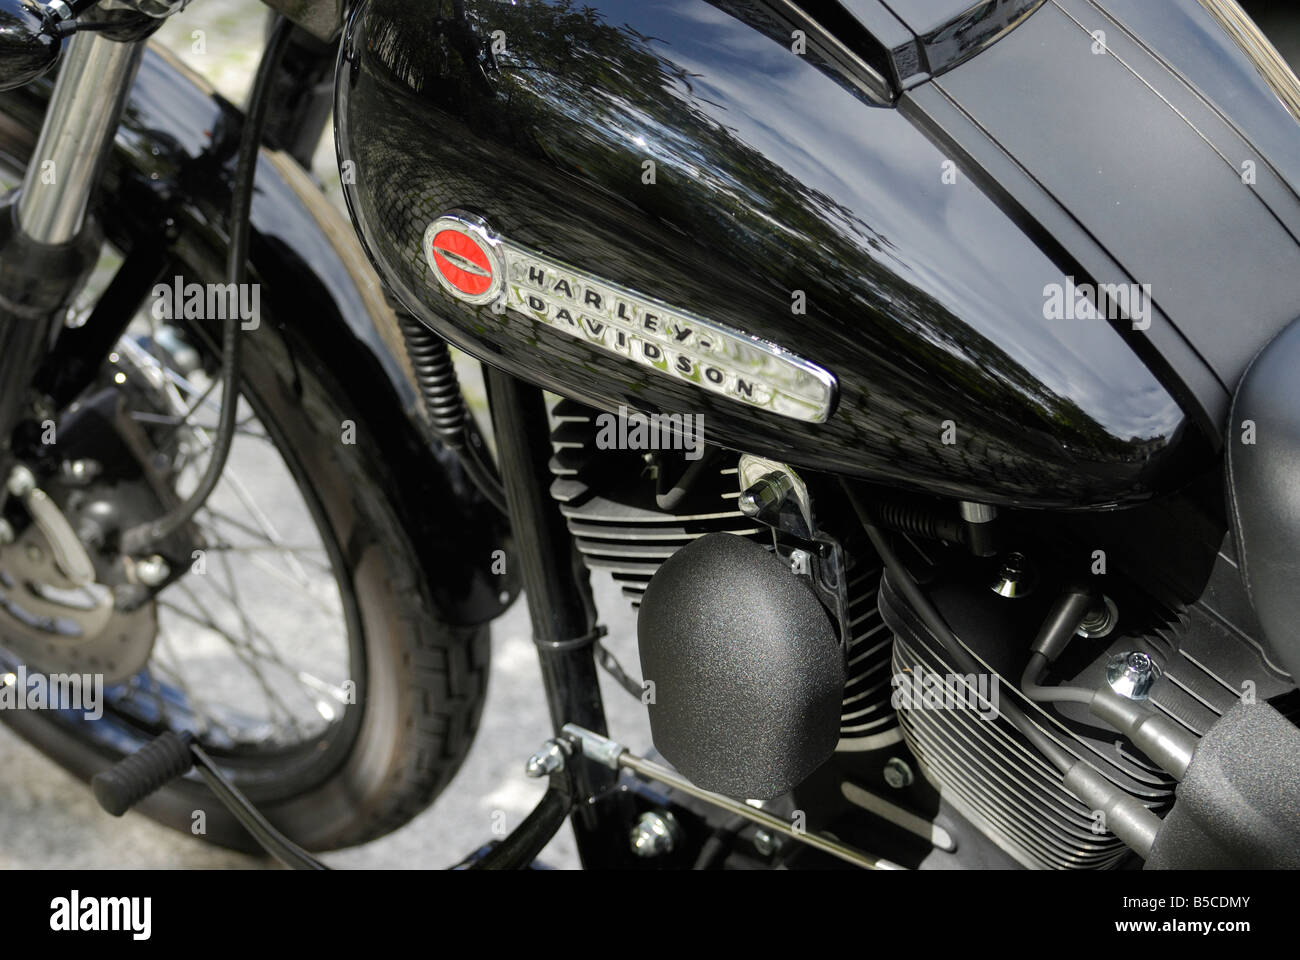 Harley Davidson Custom Motorcycle chrome Engine detail Stock Photo